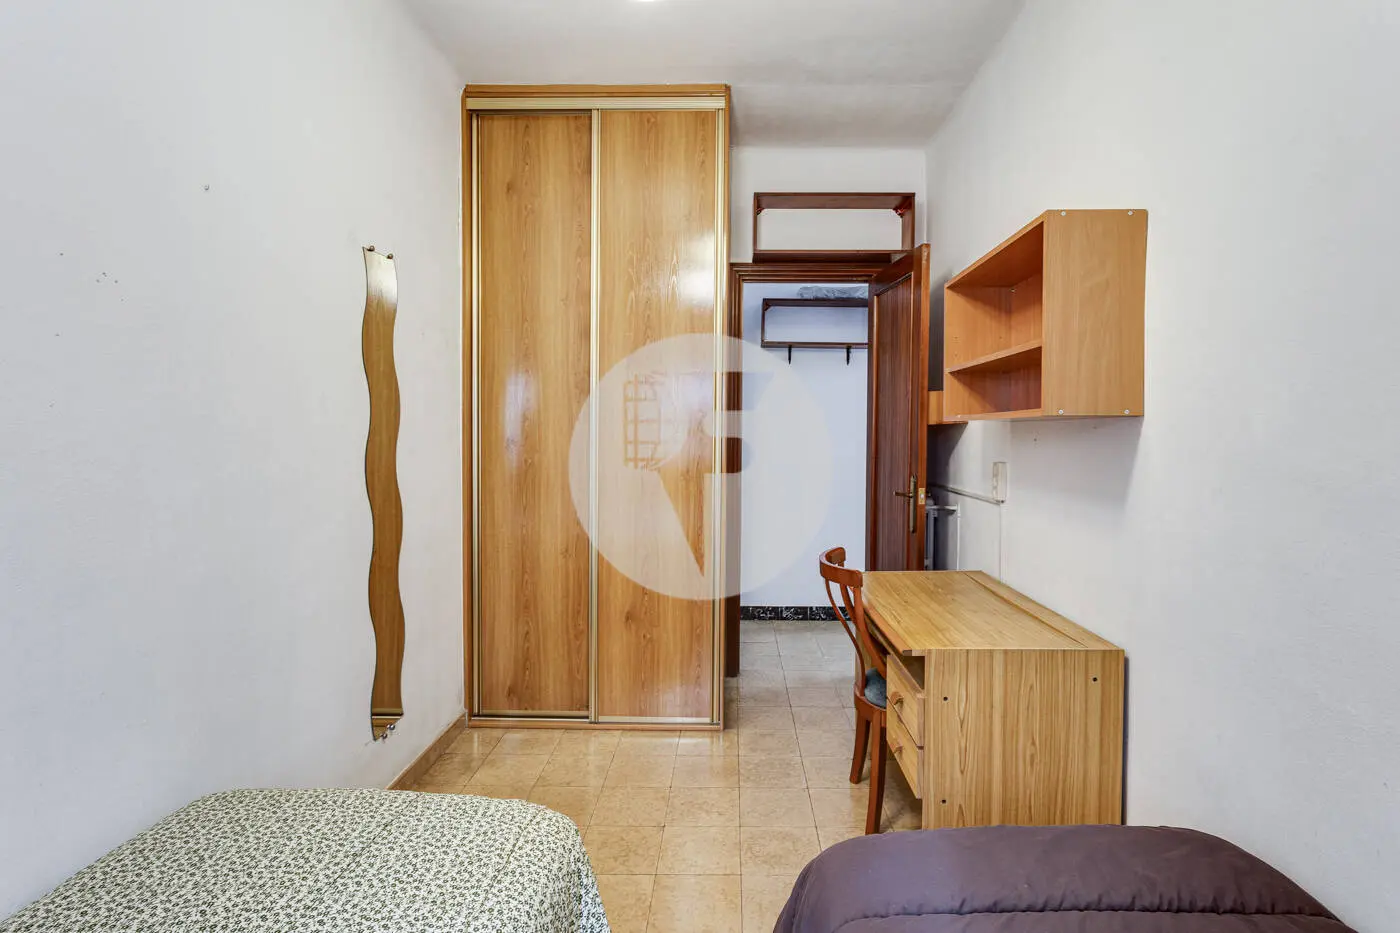 3-bedroom apartment located in the Nova Esquerra de l'Eixample neighborhood of Barcelona. 24